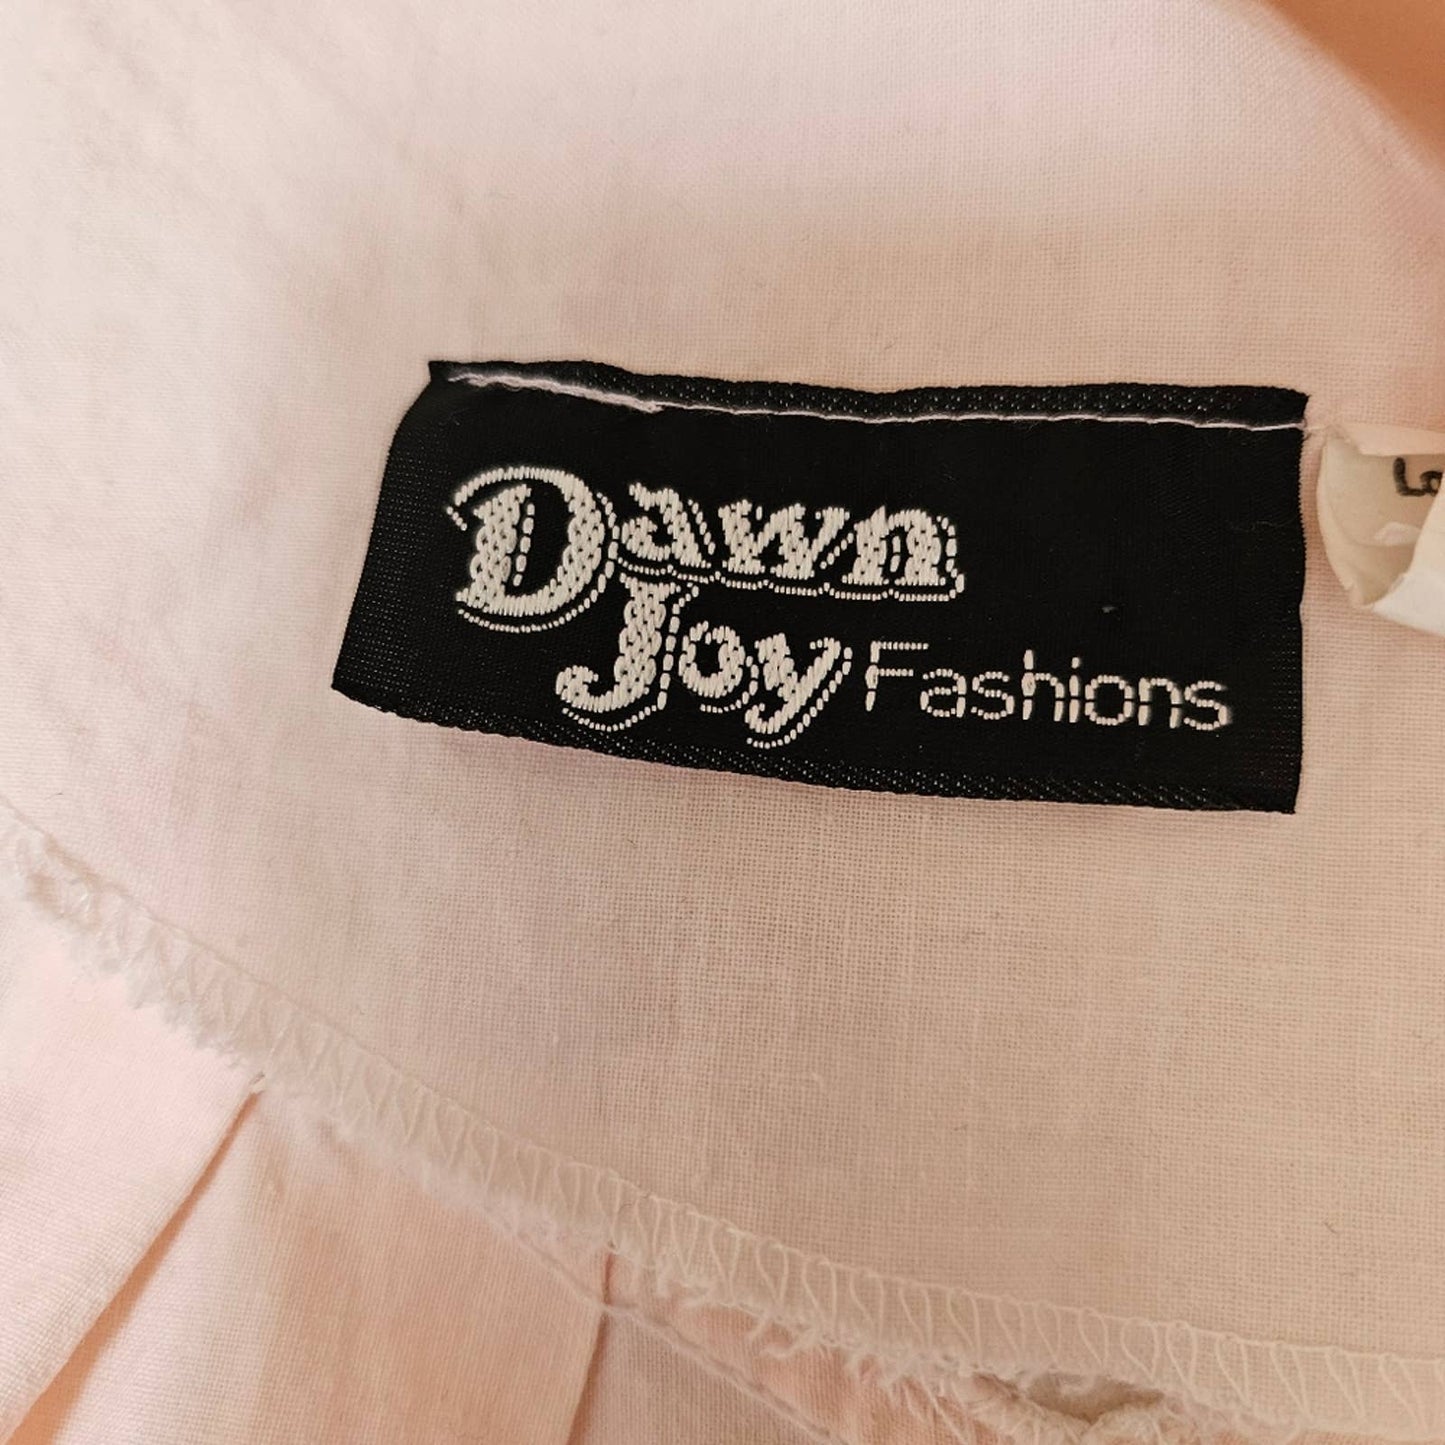 Vintage 80s Dawn Joy Fashions Light Pink Cotton Half Sleeve Secretary Dress